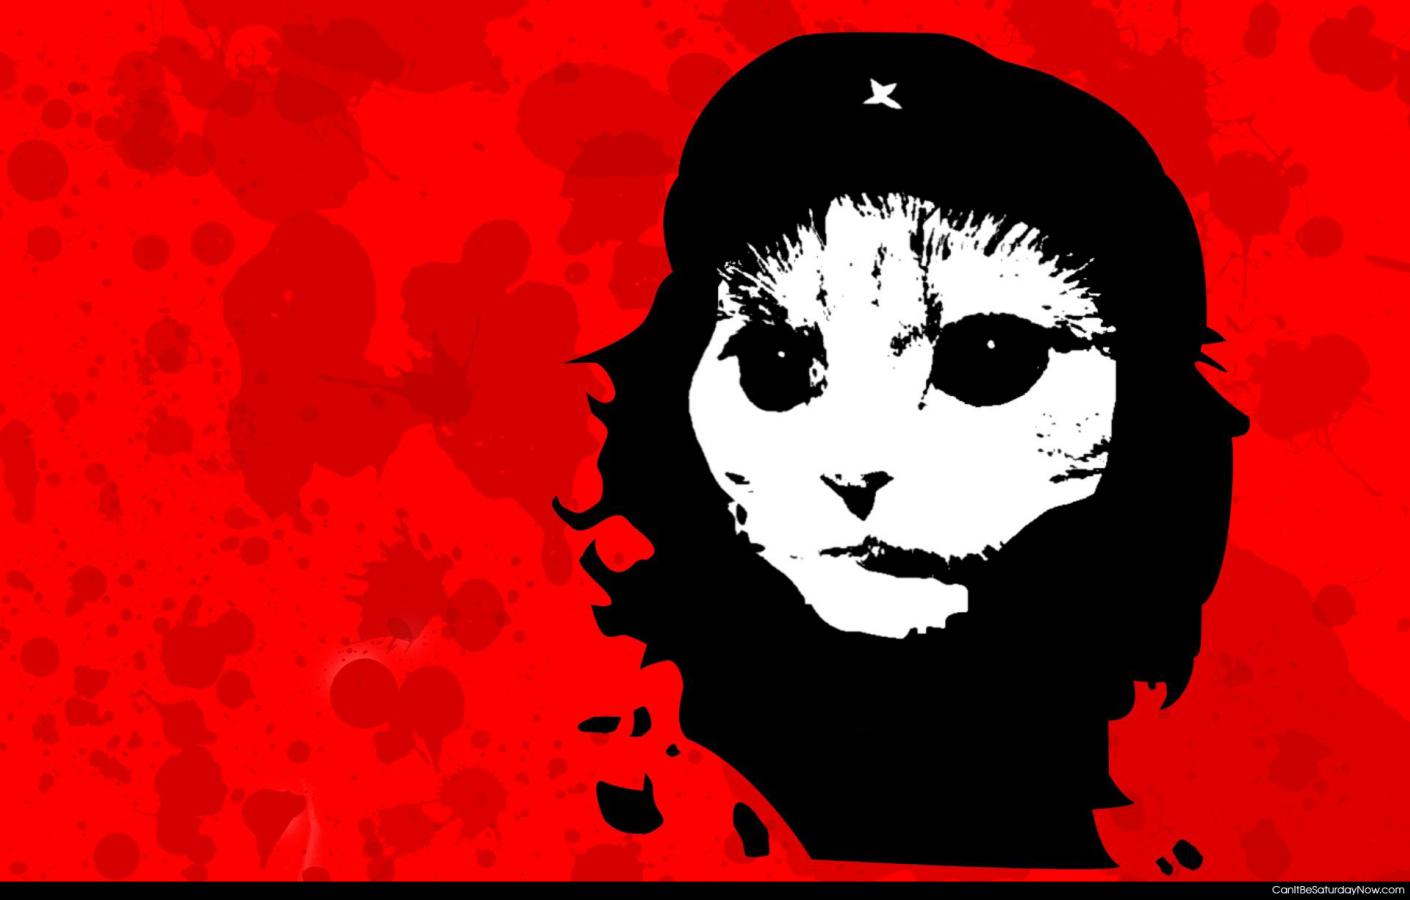 Communism kitty - communism kitty is still cute